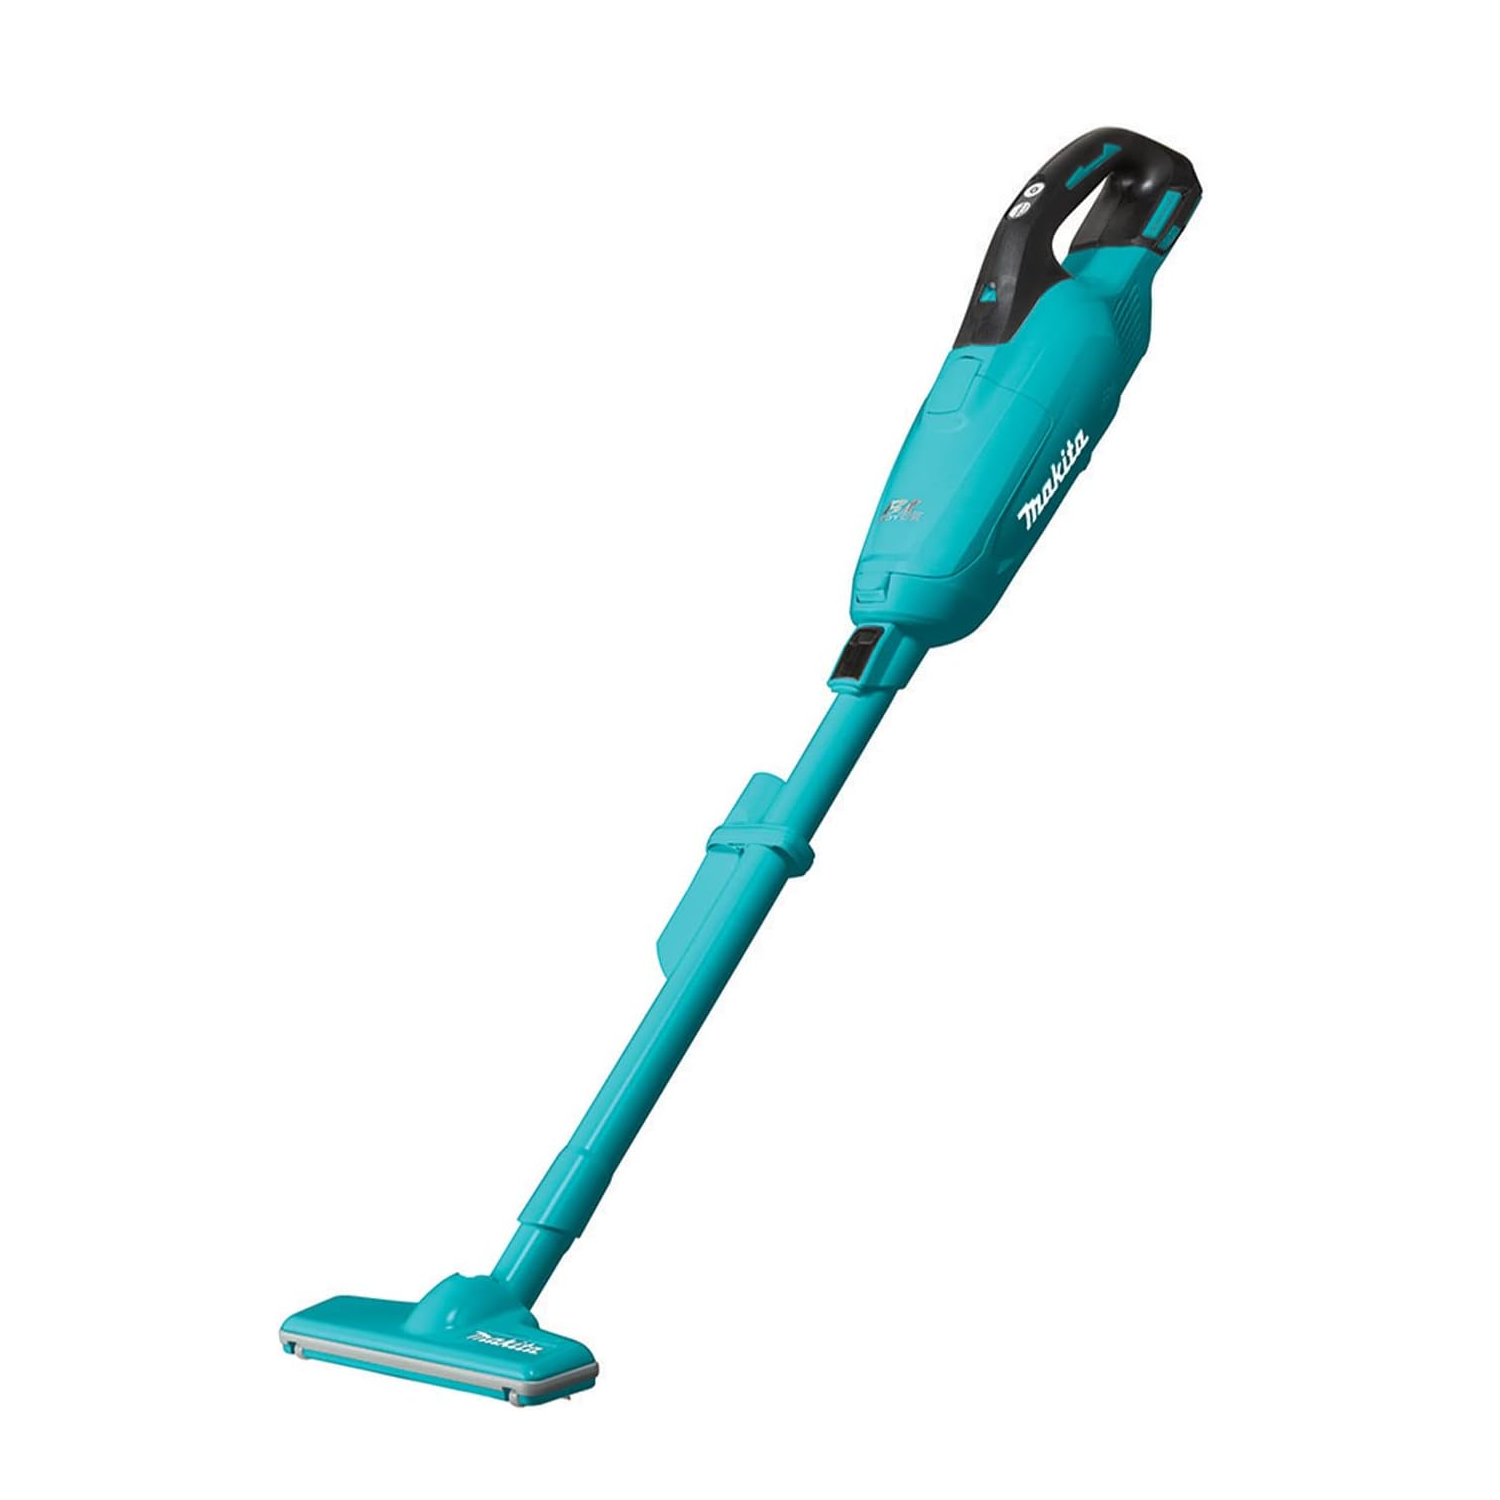 Makita dcl282fz 18v brushless vacuum cleaner bare unit